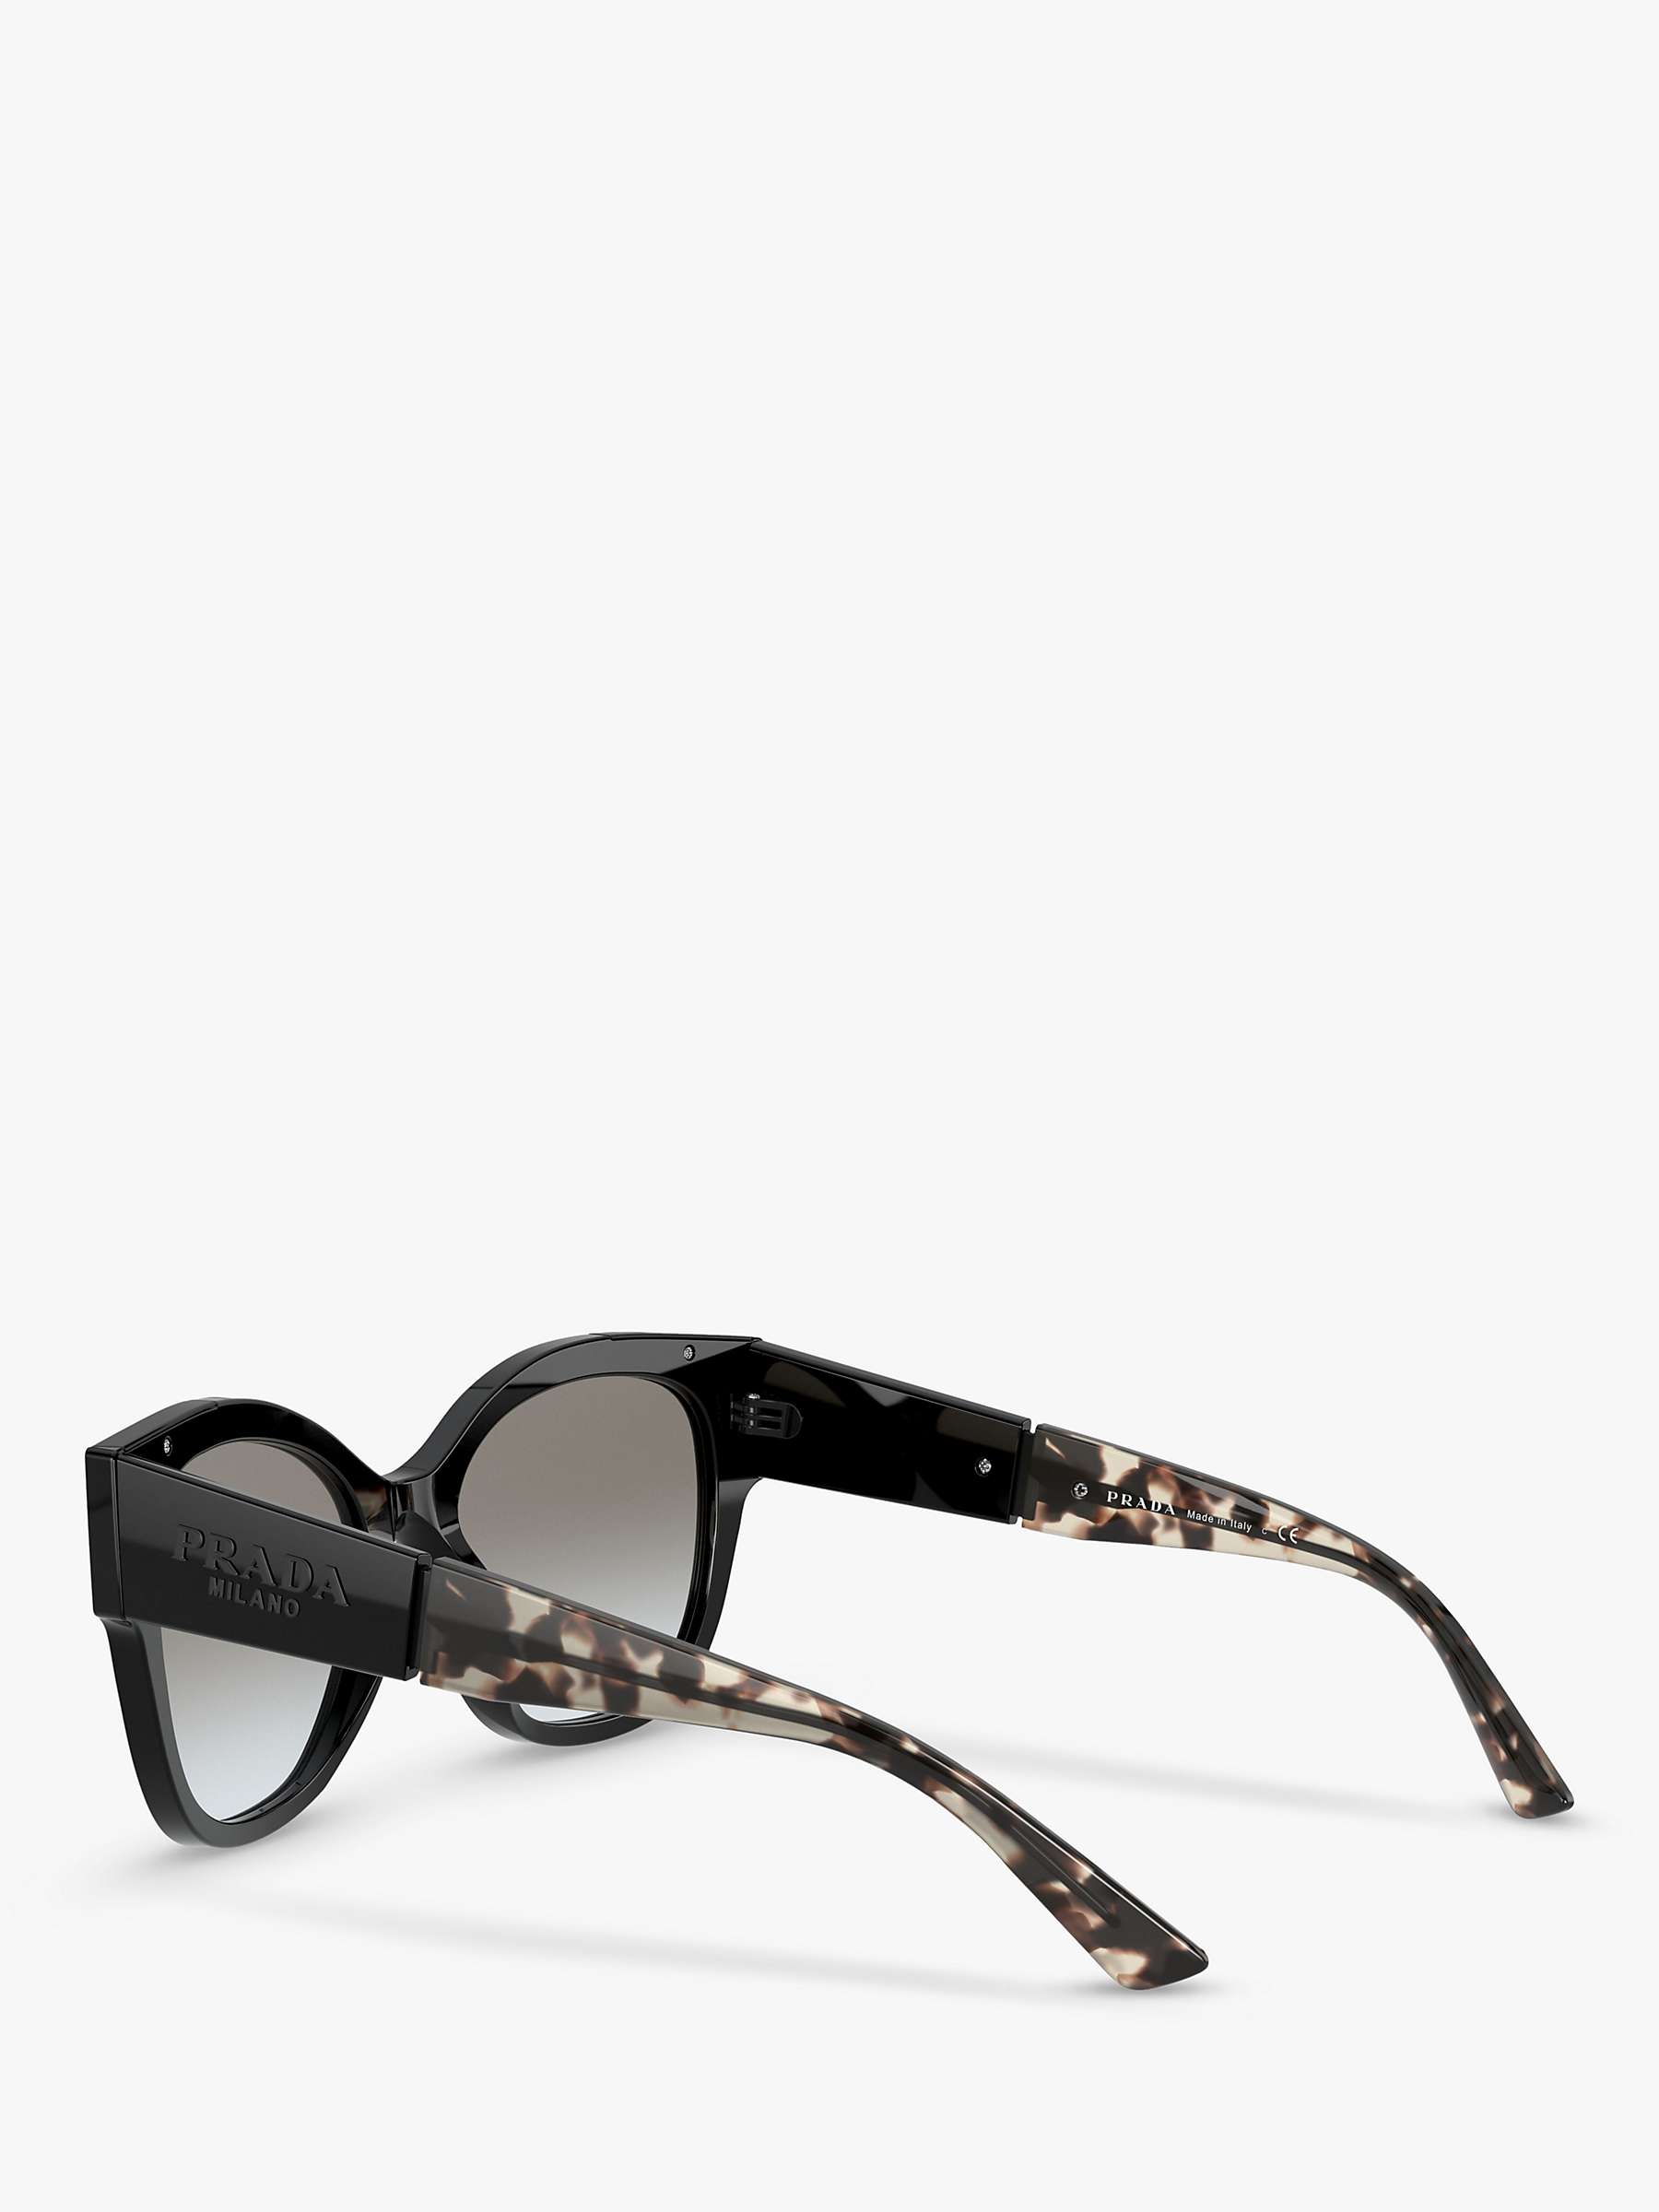 Buy Prada PR 02WS Women's Pillow Sunglasses, Black Online at johnlewis.com